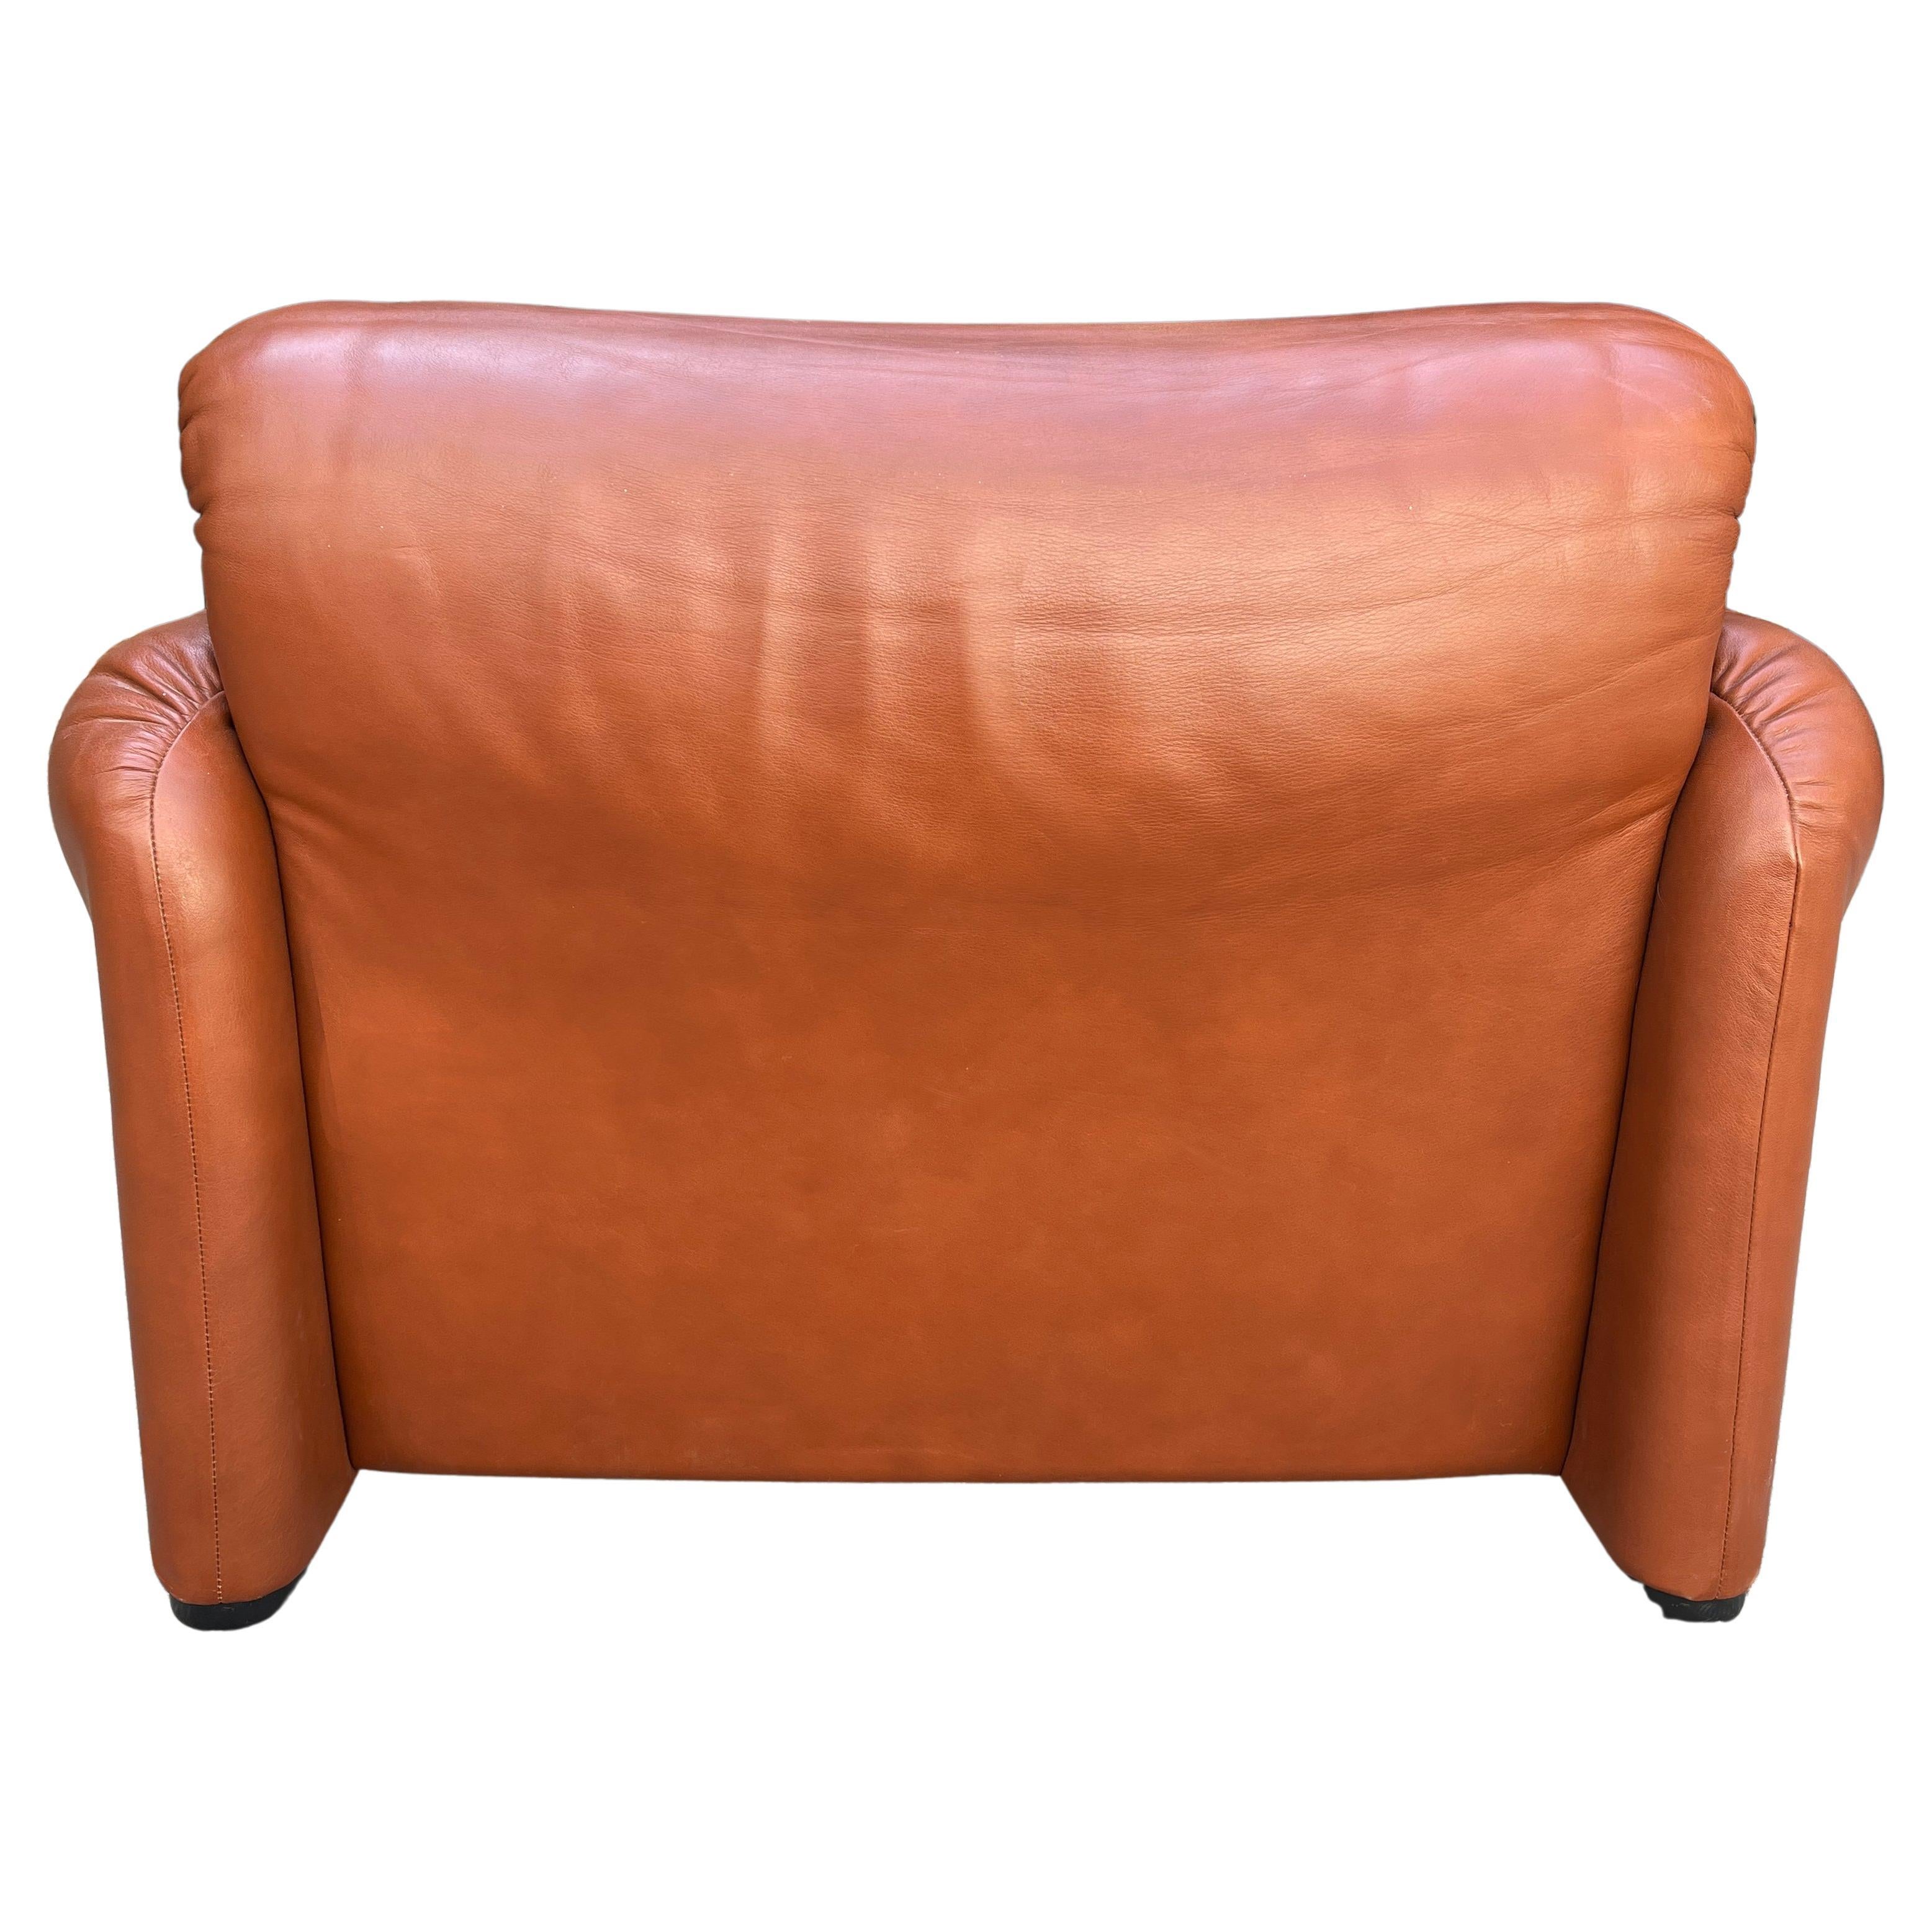 Mid-Century Modern Original Maralunga Lounge Chair for Cassina Designed by Vico Magistretti